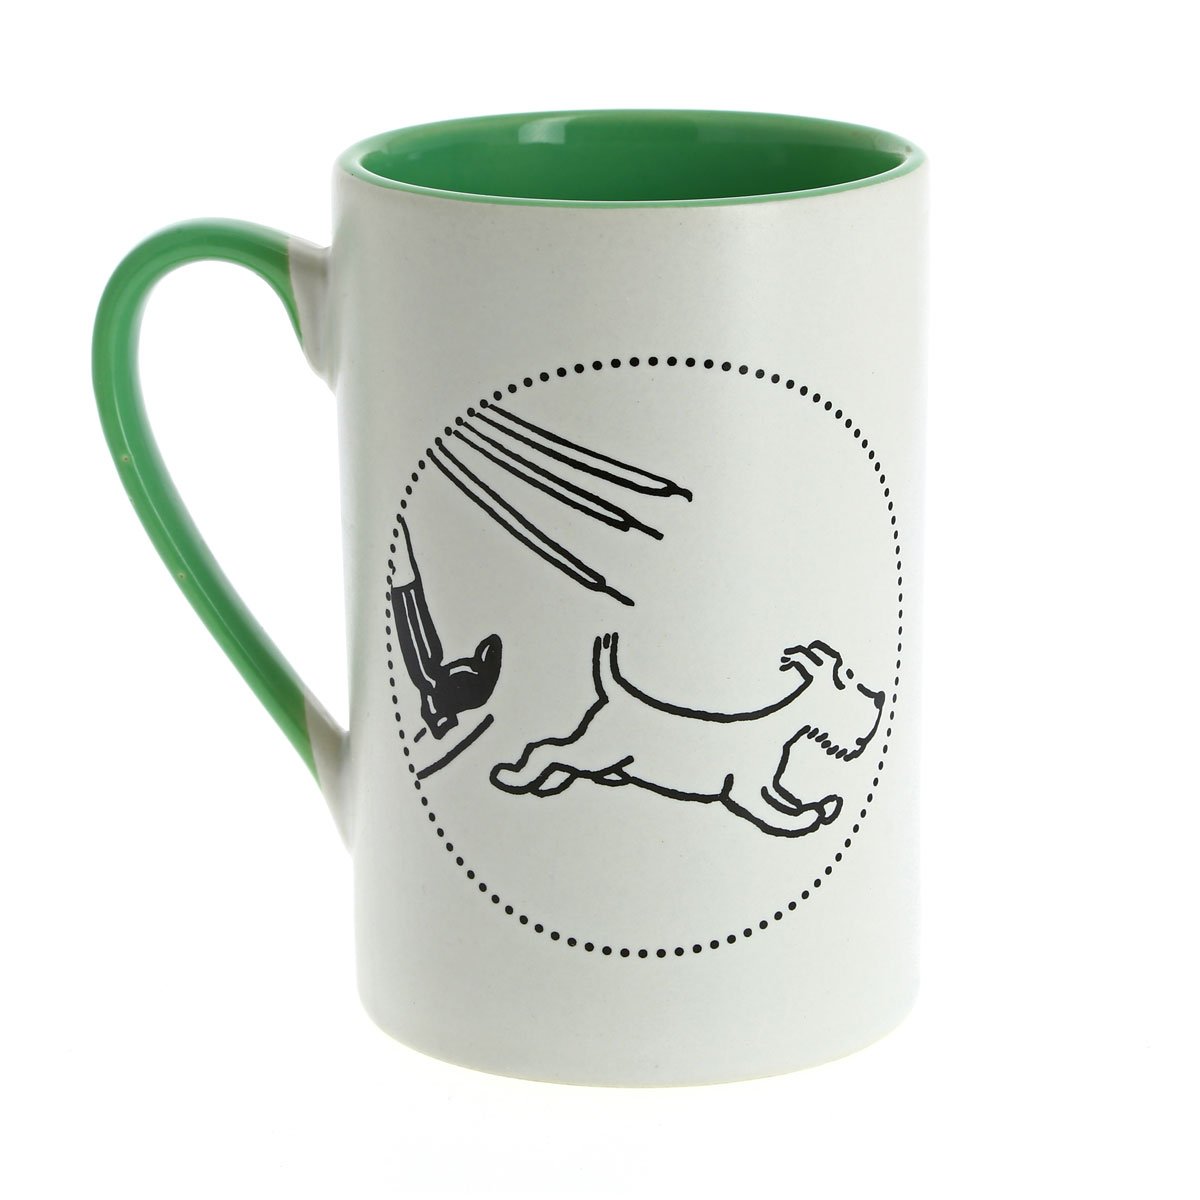 Red & green Tintin mugs